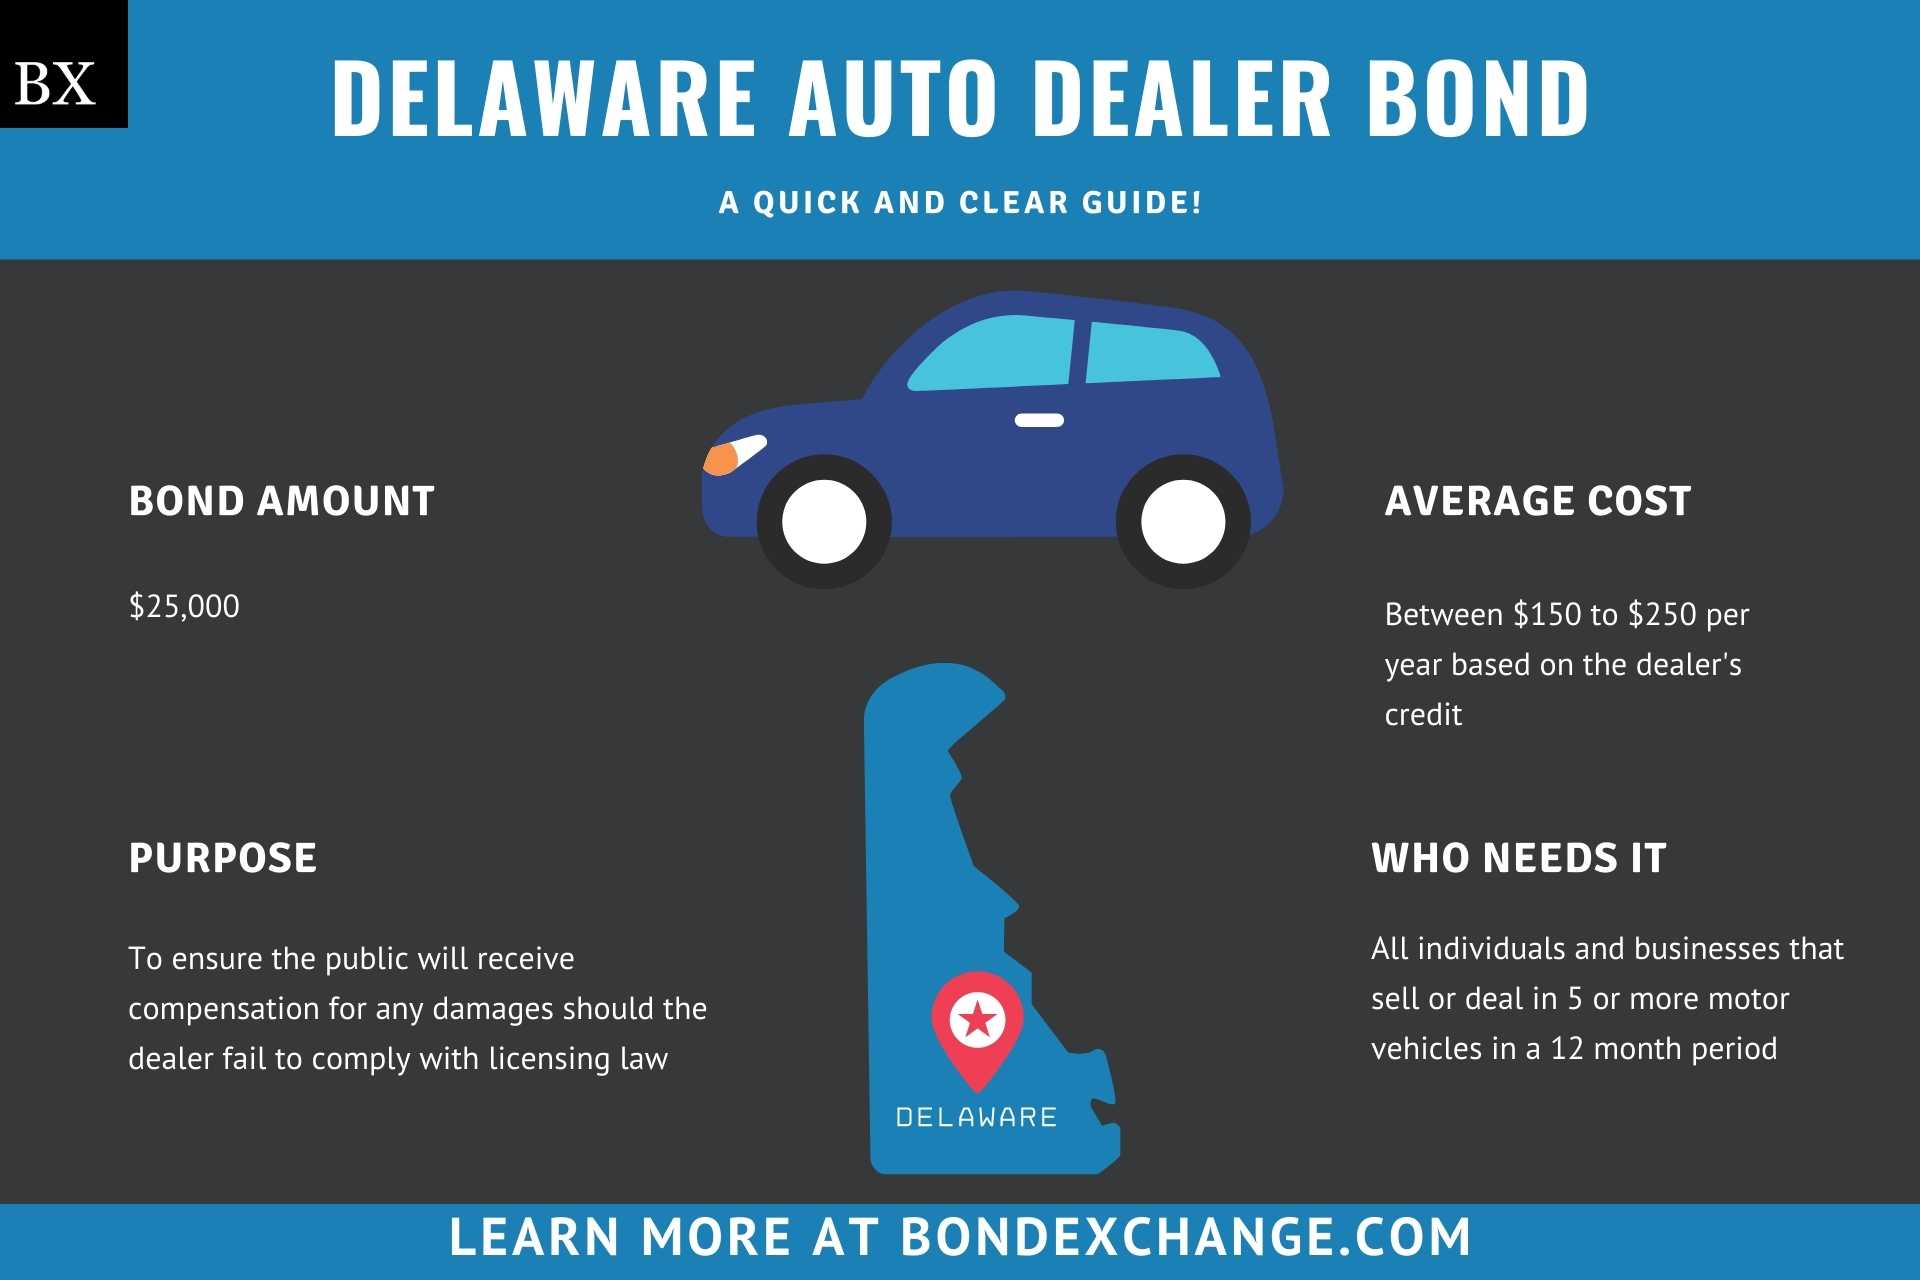 Delaware Auto Dealer